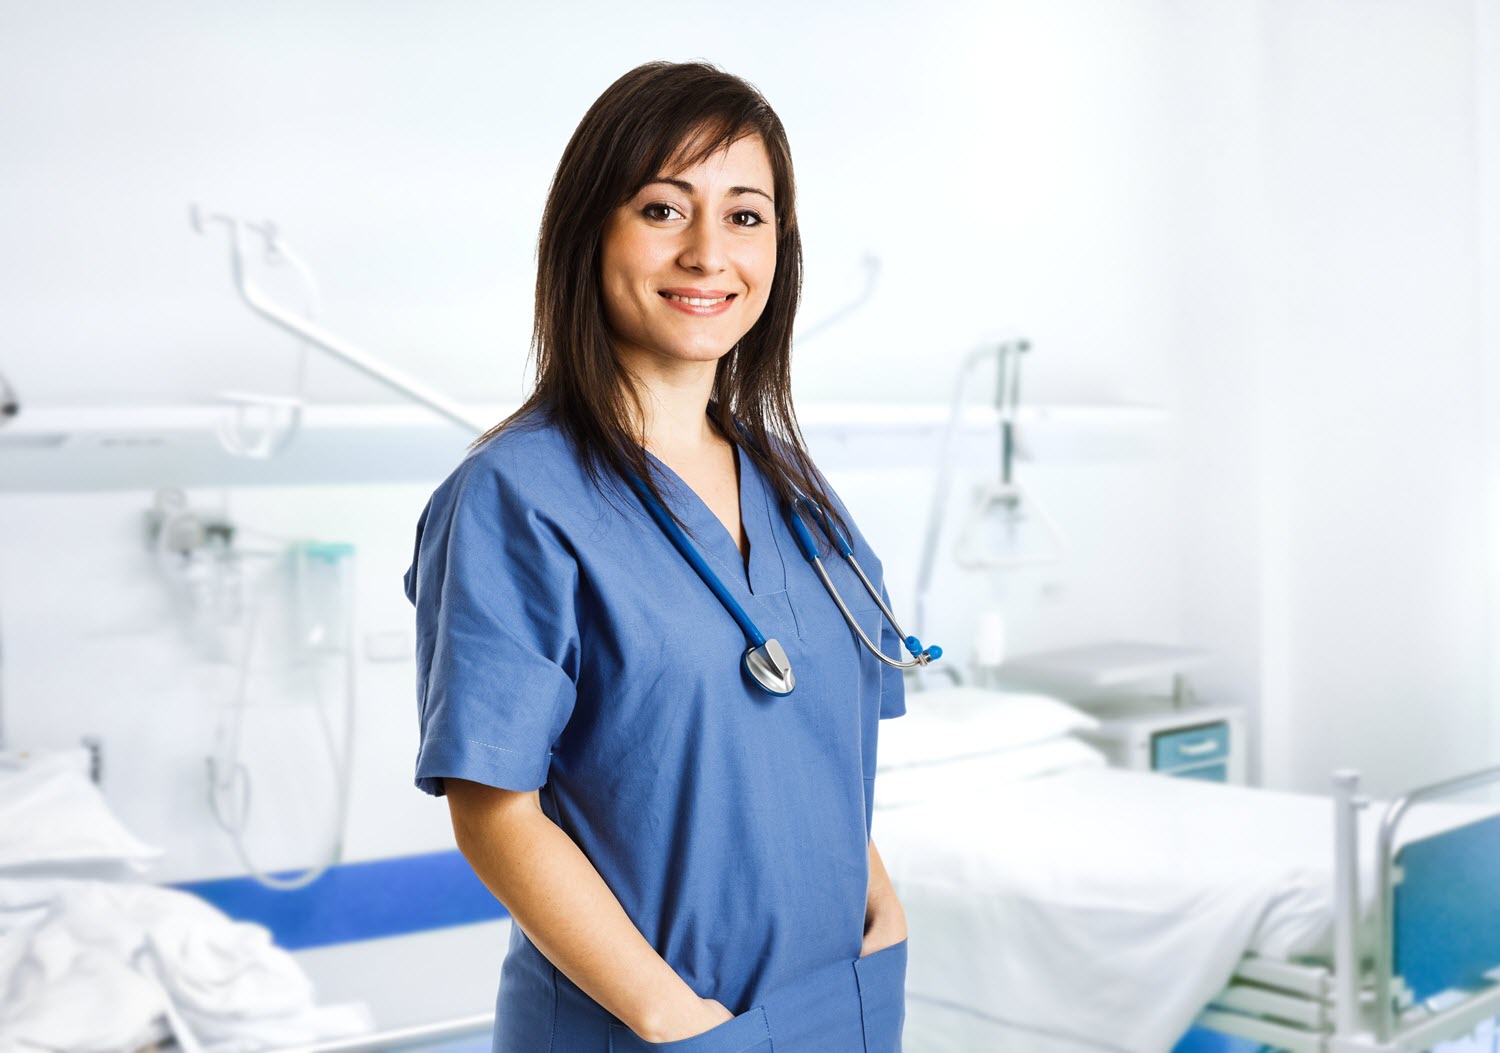 Recruiting Registered Nurses (RNs) in 2021